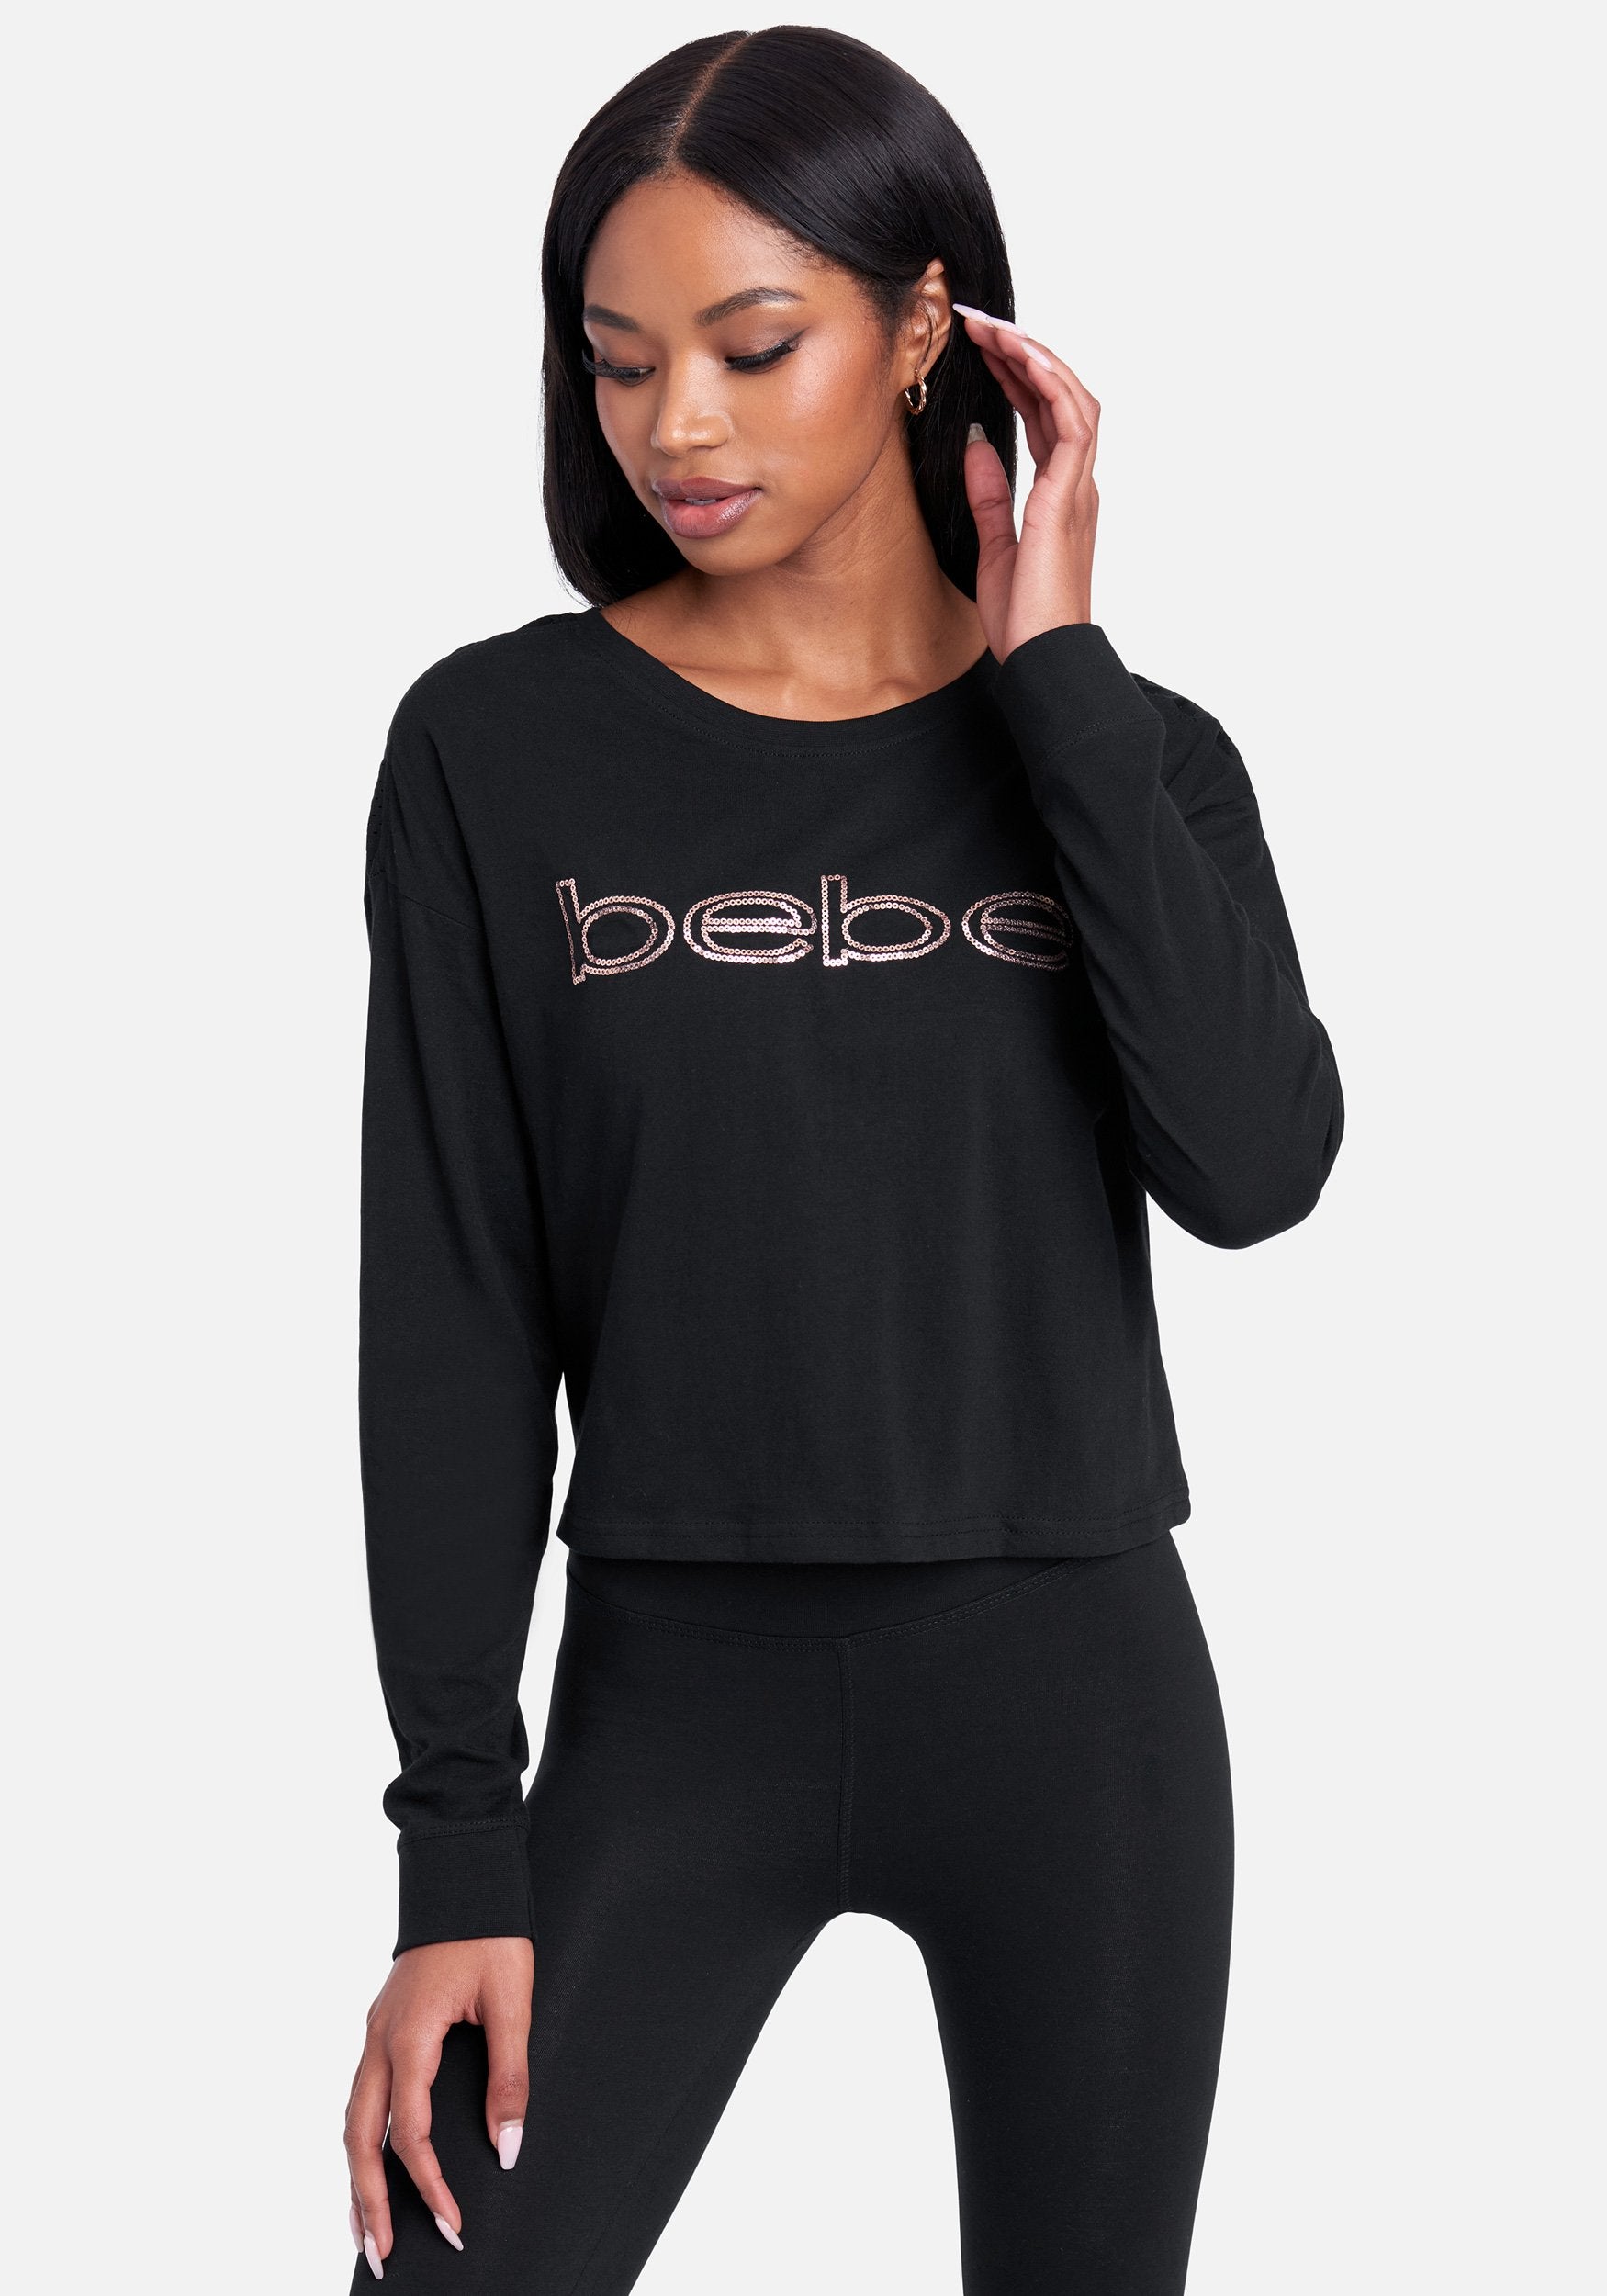  -Bebe Logo Sequin Long Sleeve Top